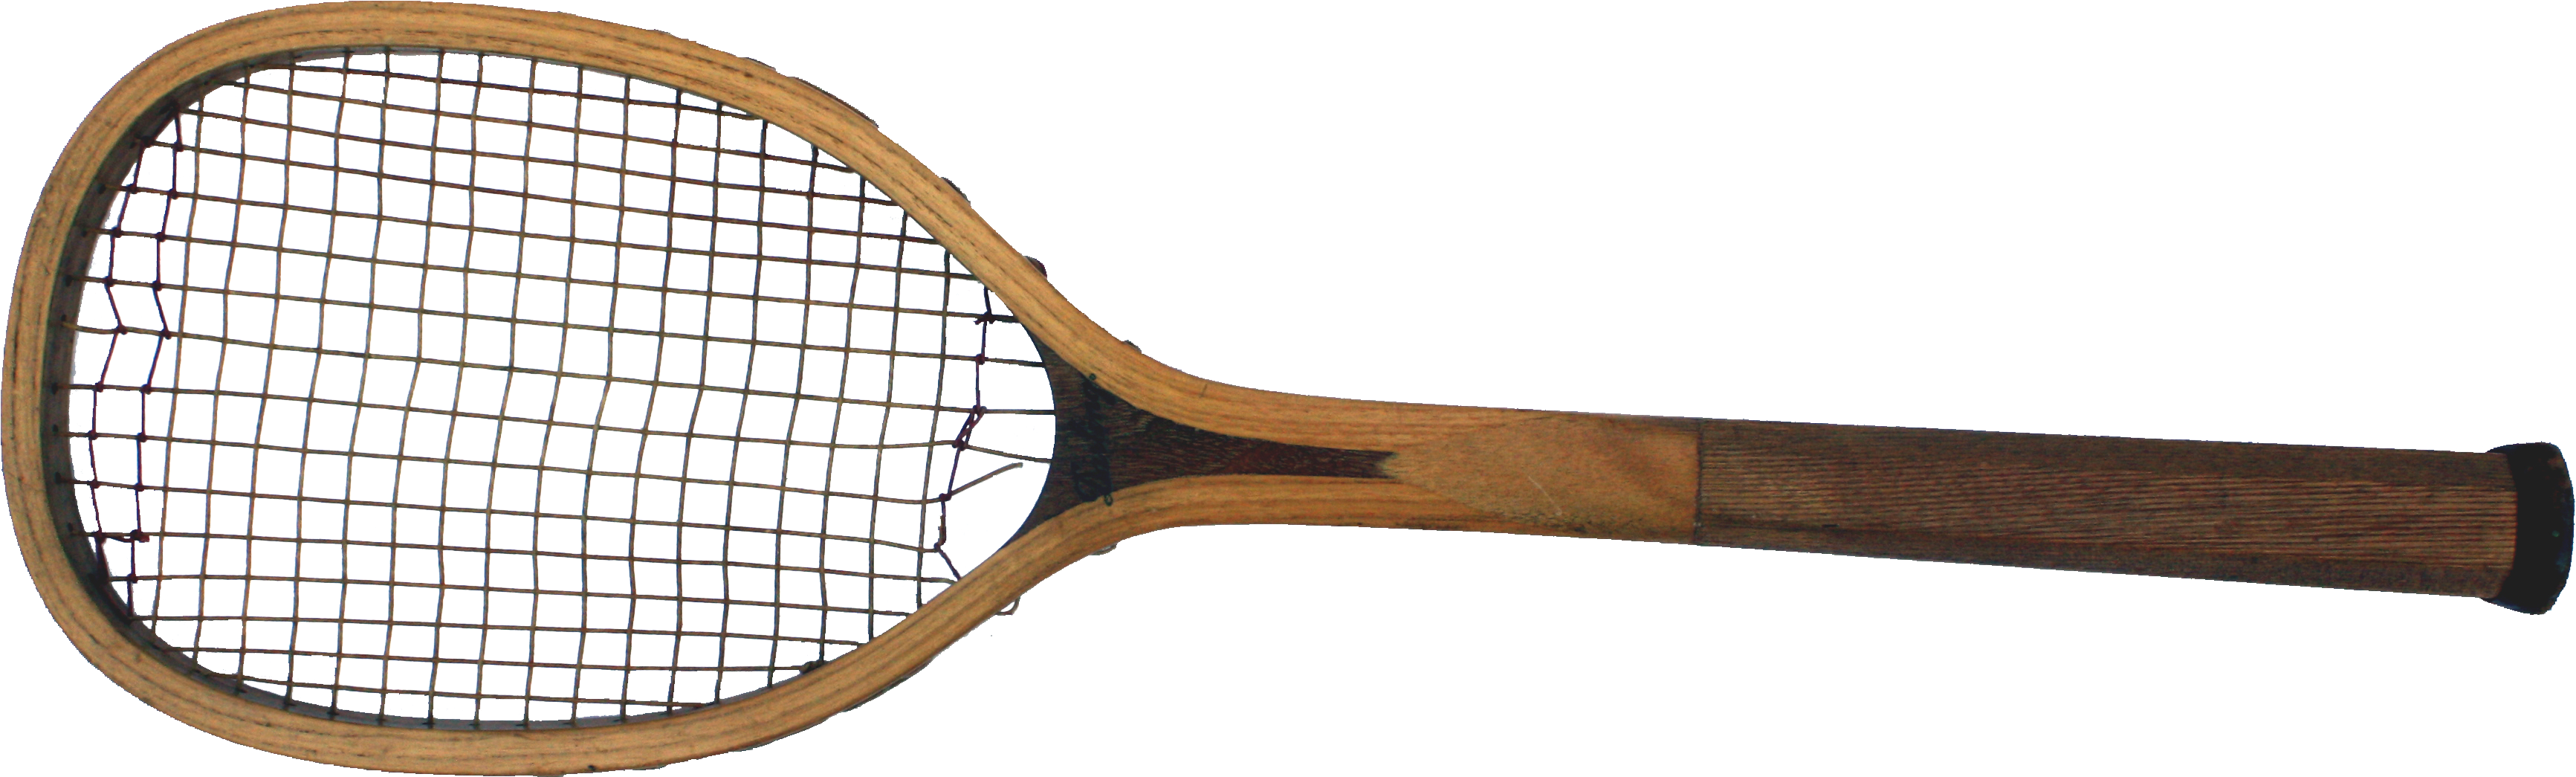 Vintage Wooden Tennis Racket PNG